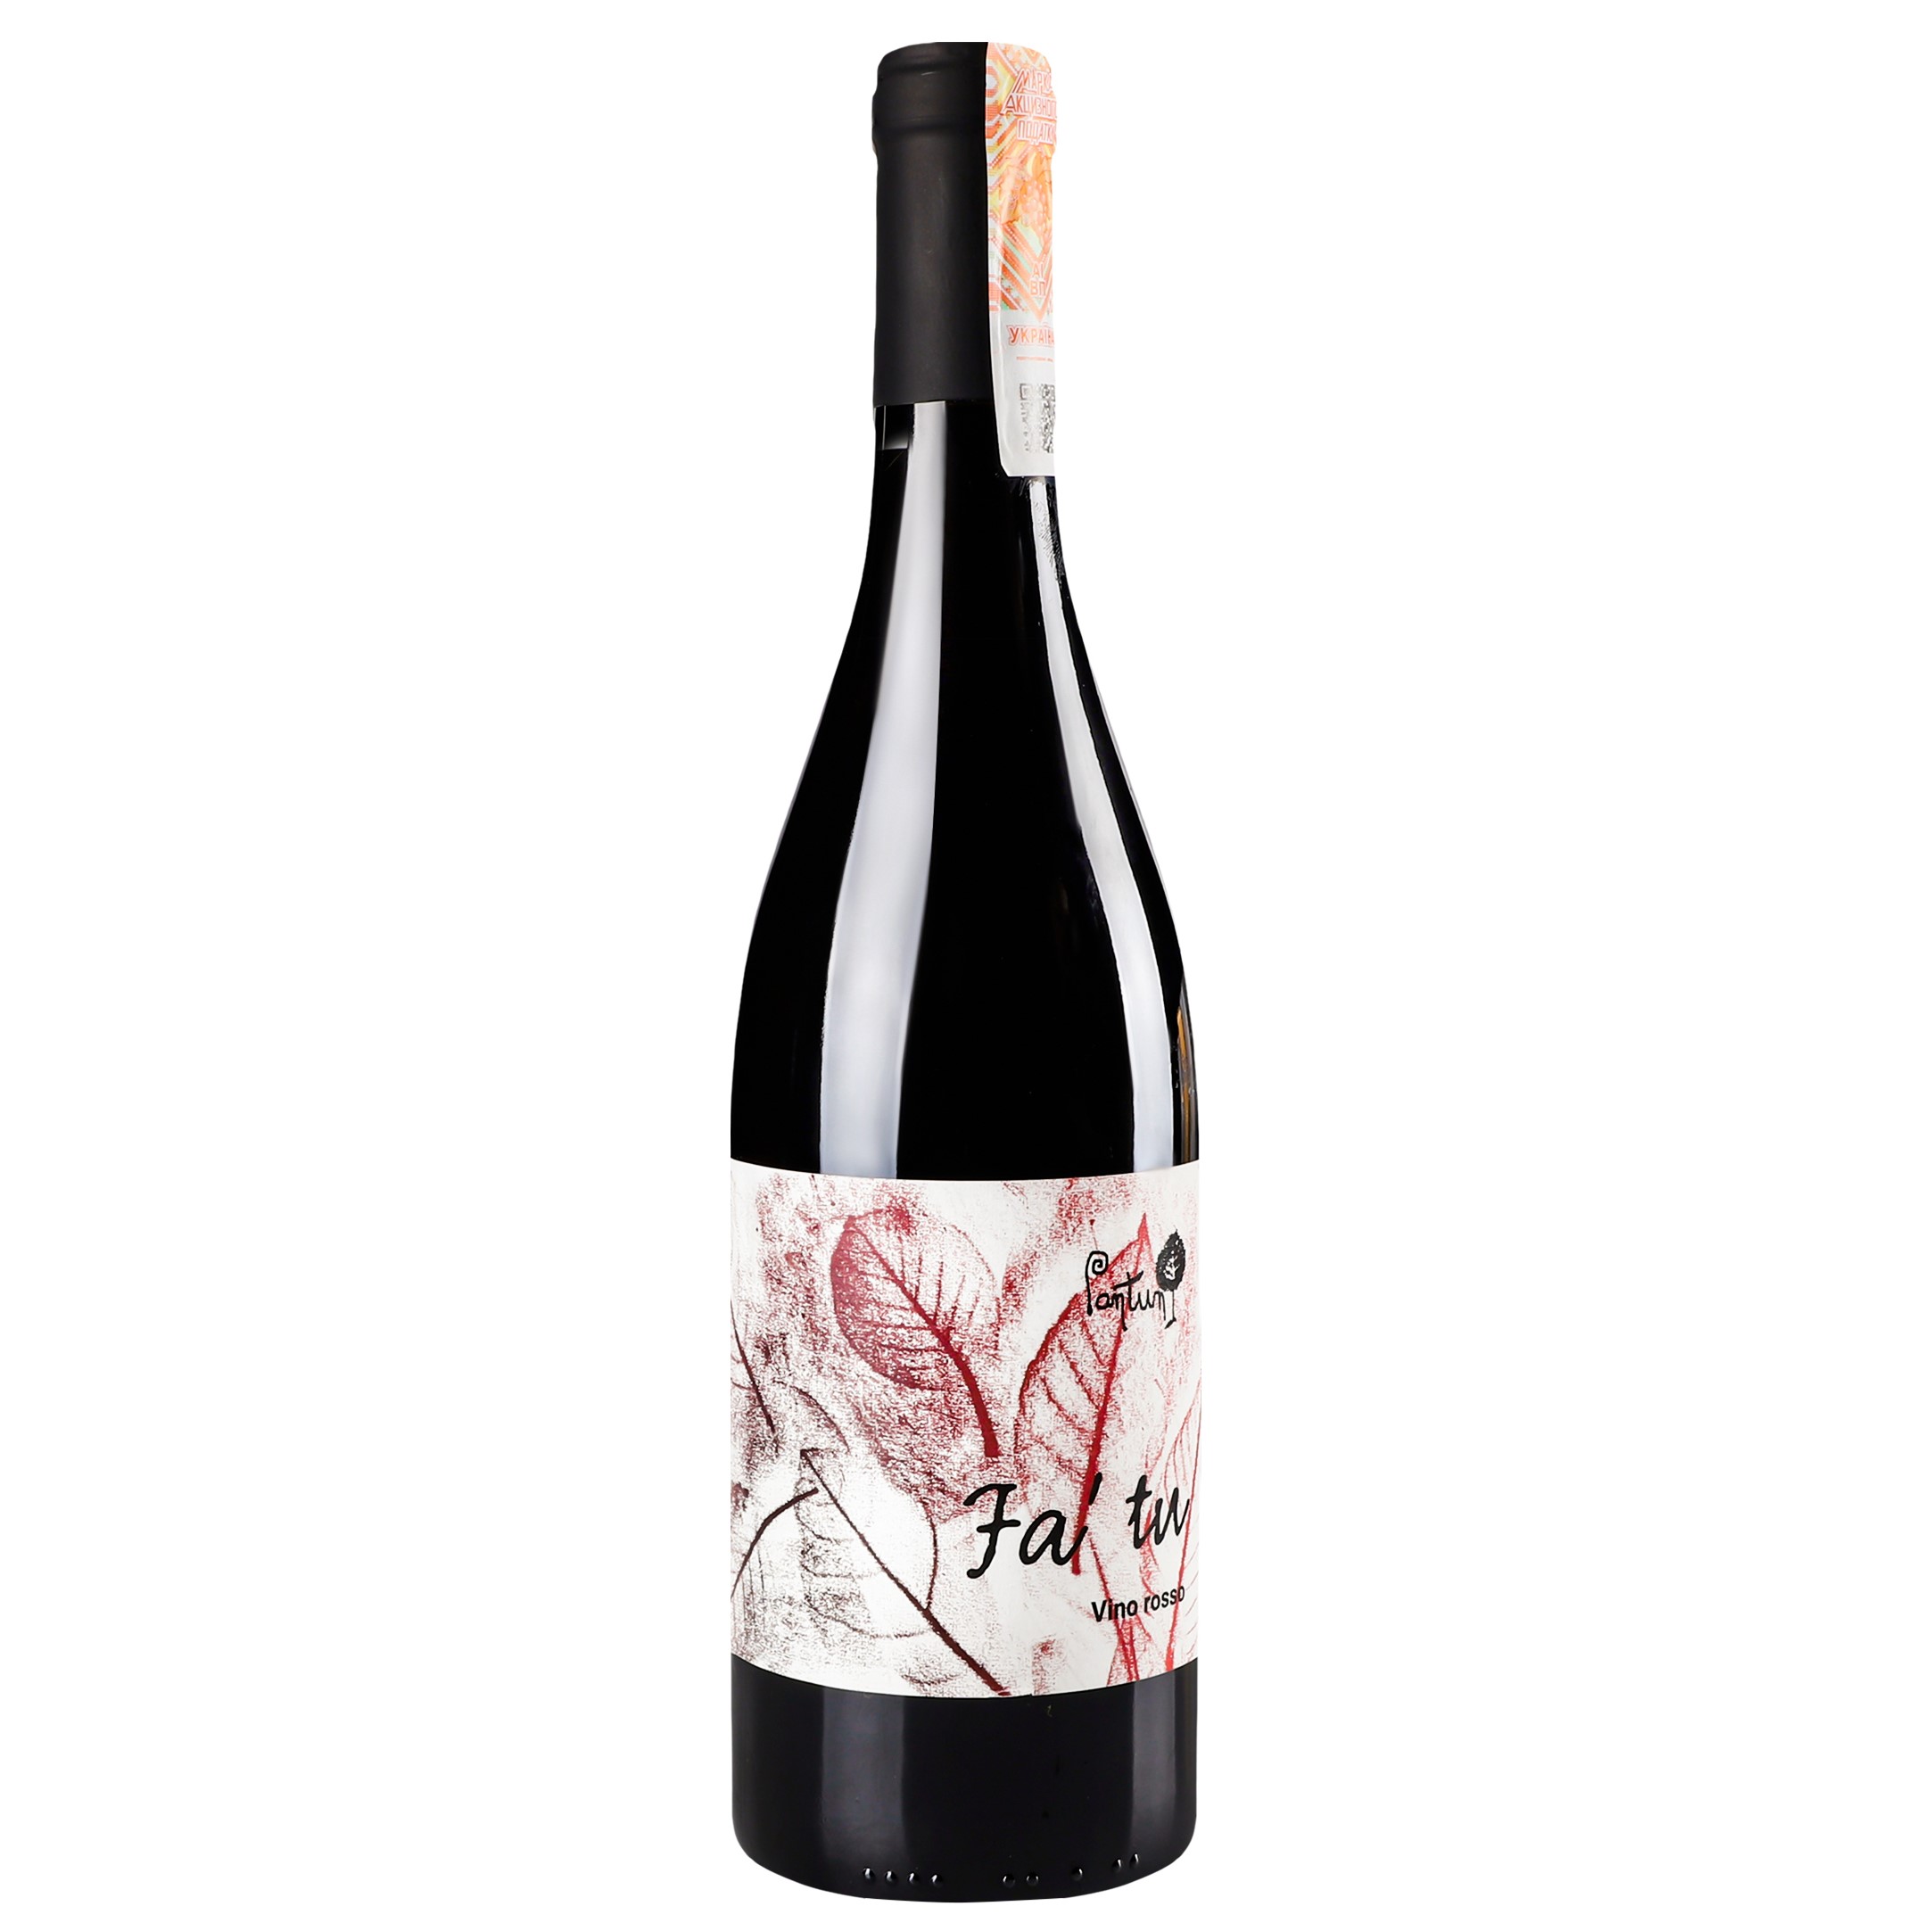 Вино Pantun Fai tu 2020 IGT, красное, сухое, 13,5%, 0,75 л (890270) - фото 1